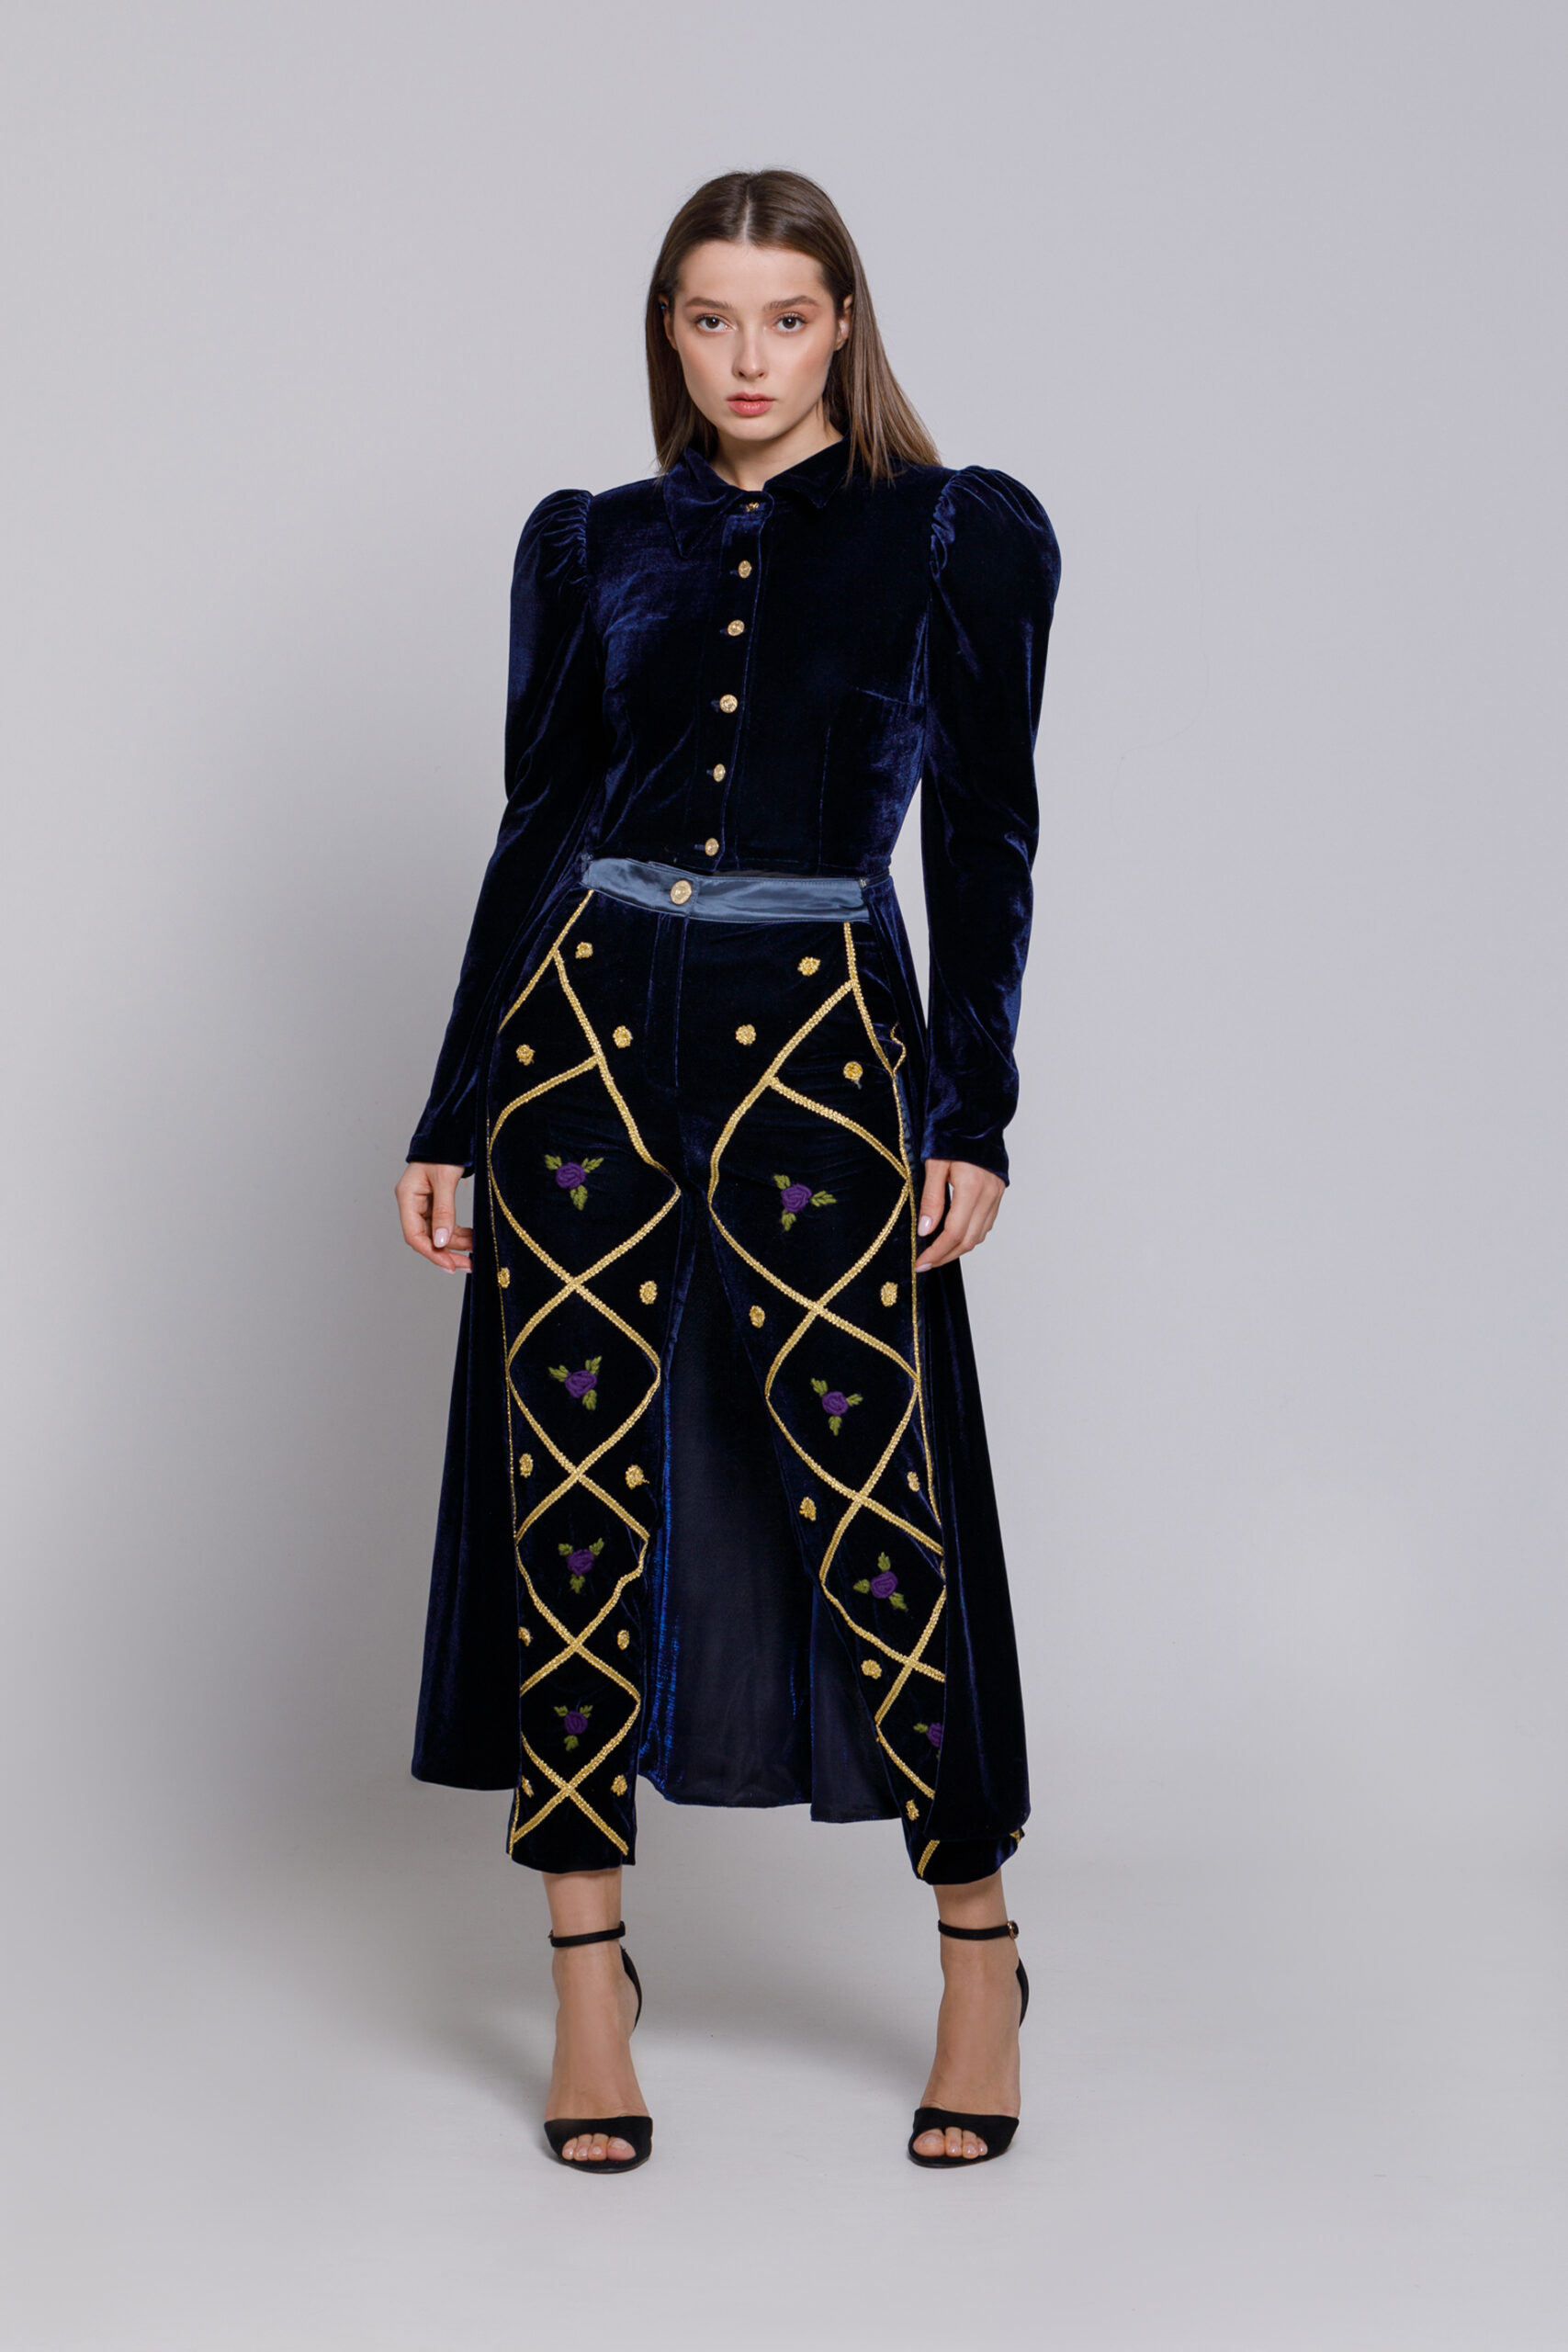 TAMAR pants in navy blue velvet with golden rhombuses. Natural fabrics, original design, handmade embroidery